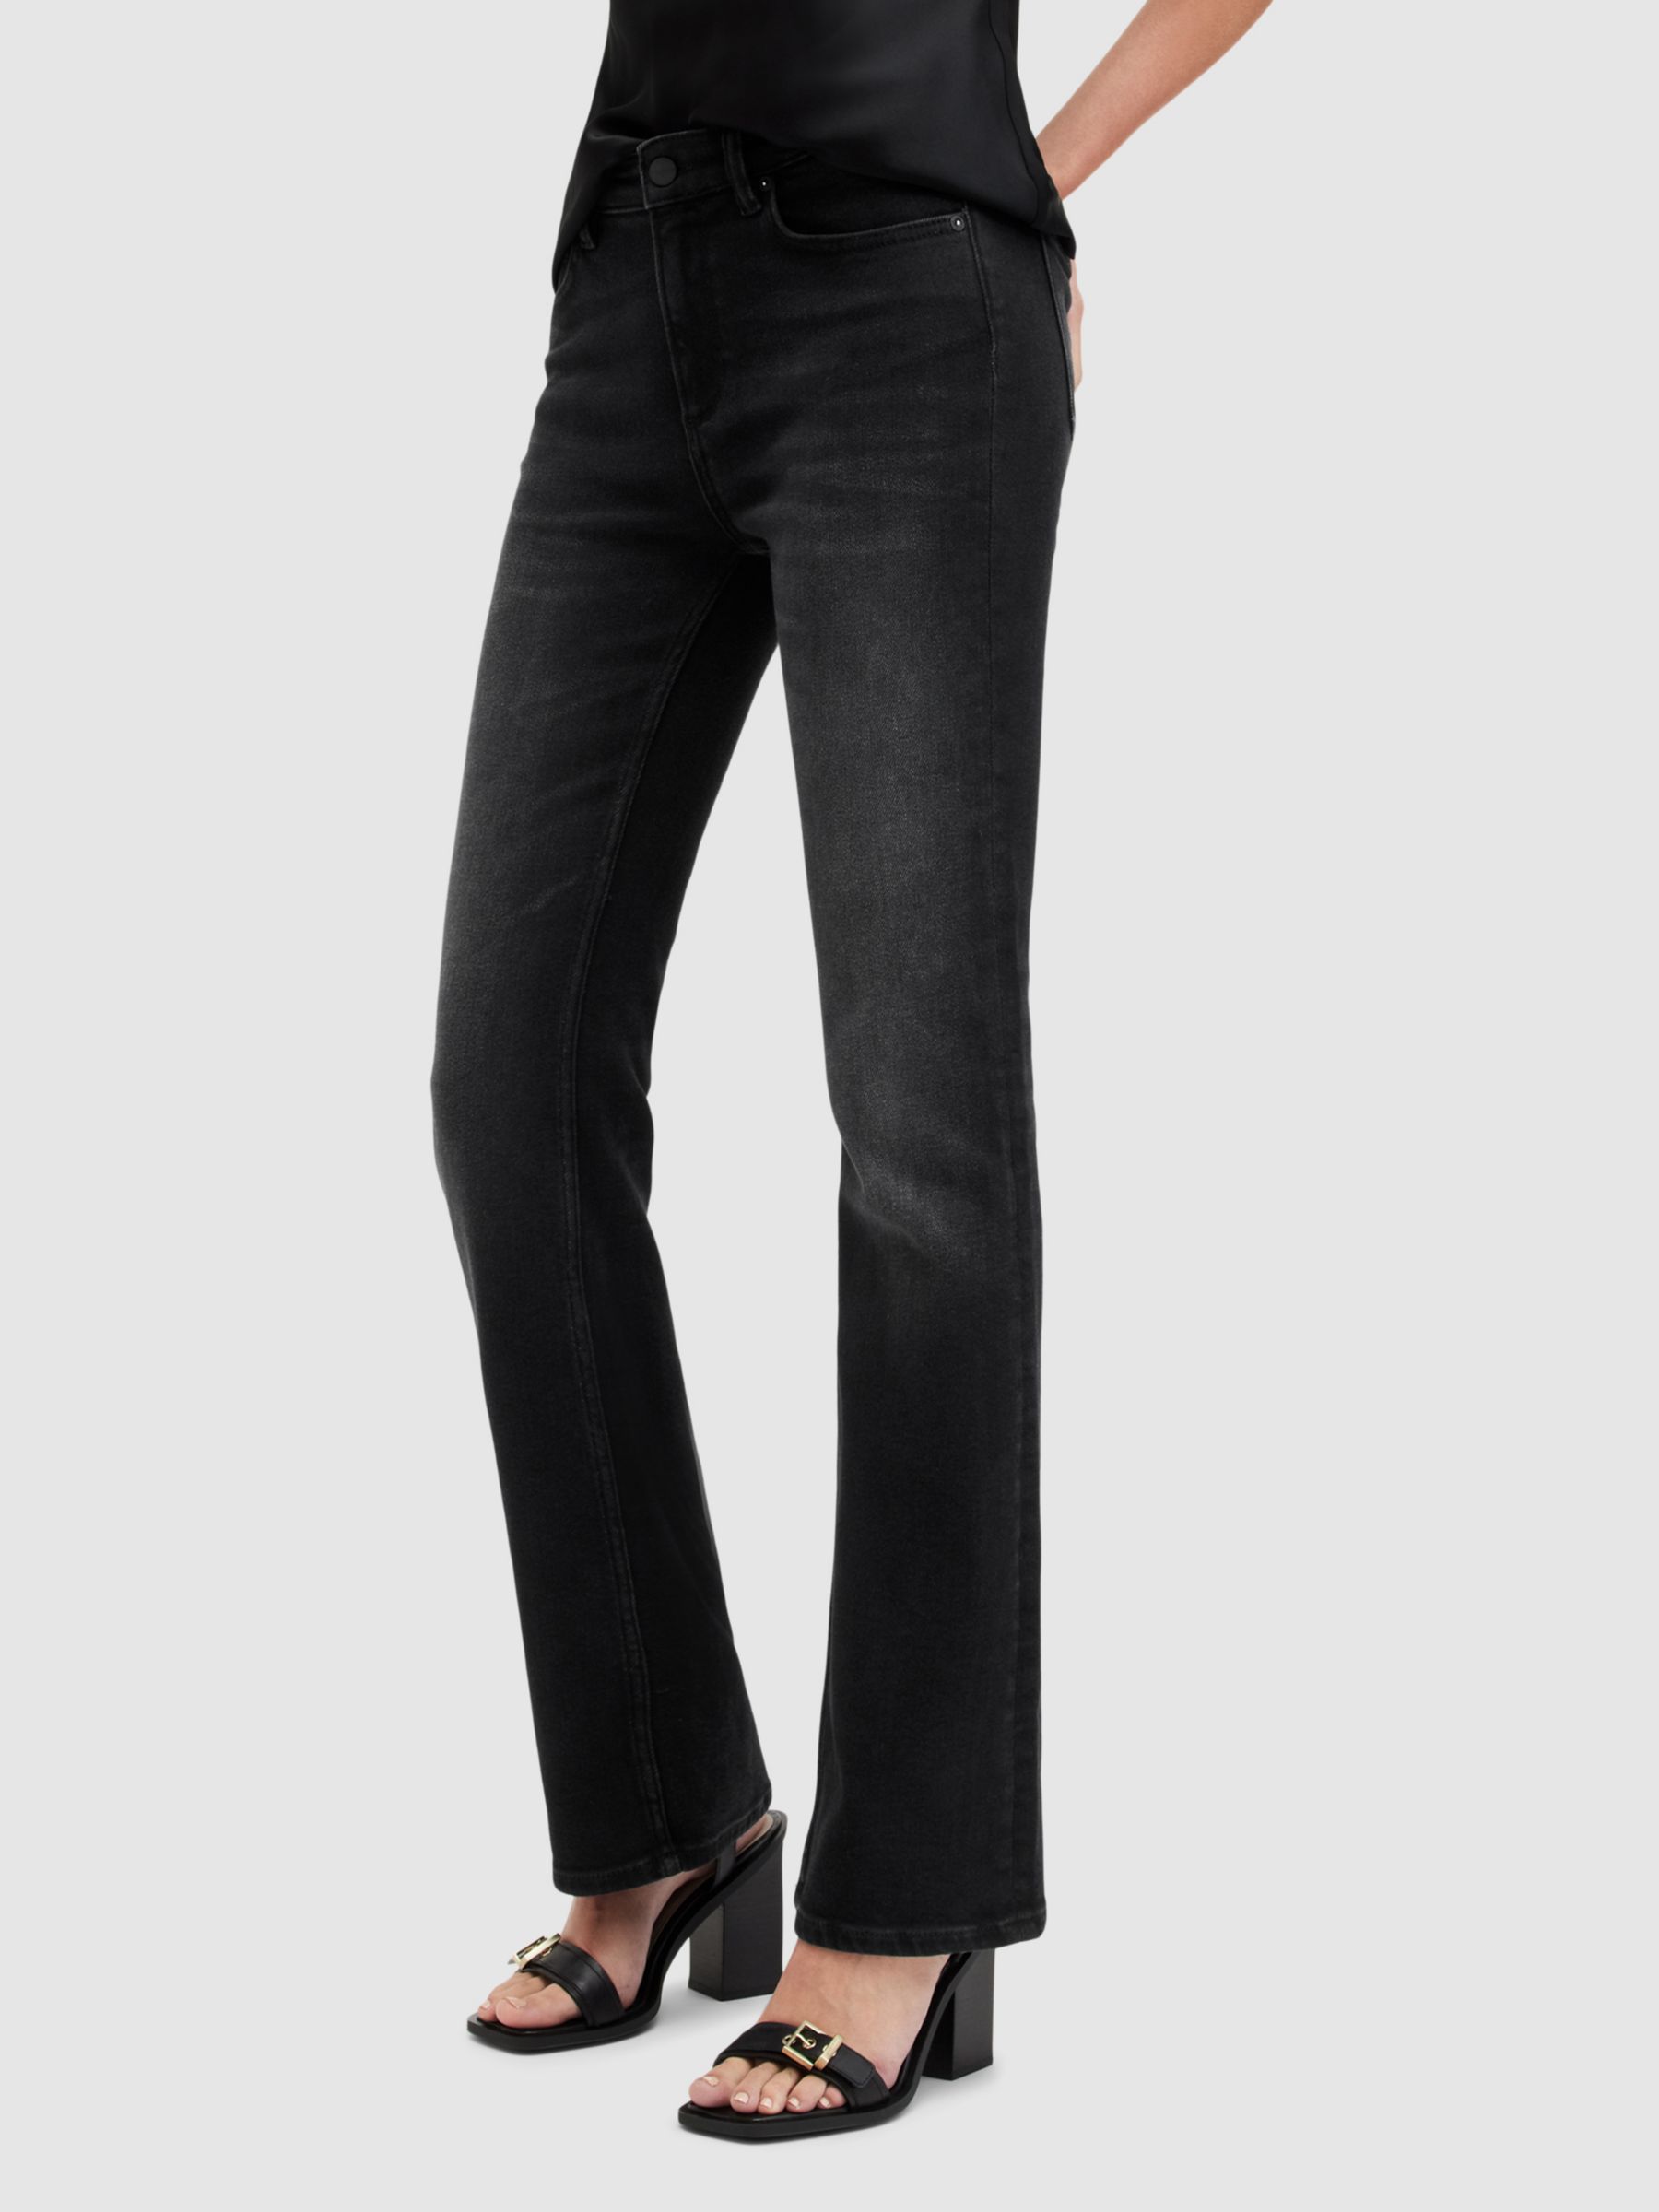 AllSaints Haldan Bootcut Jeans, Black, 25